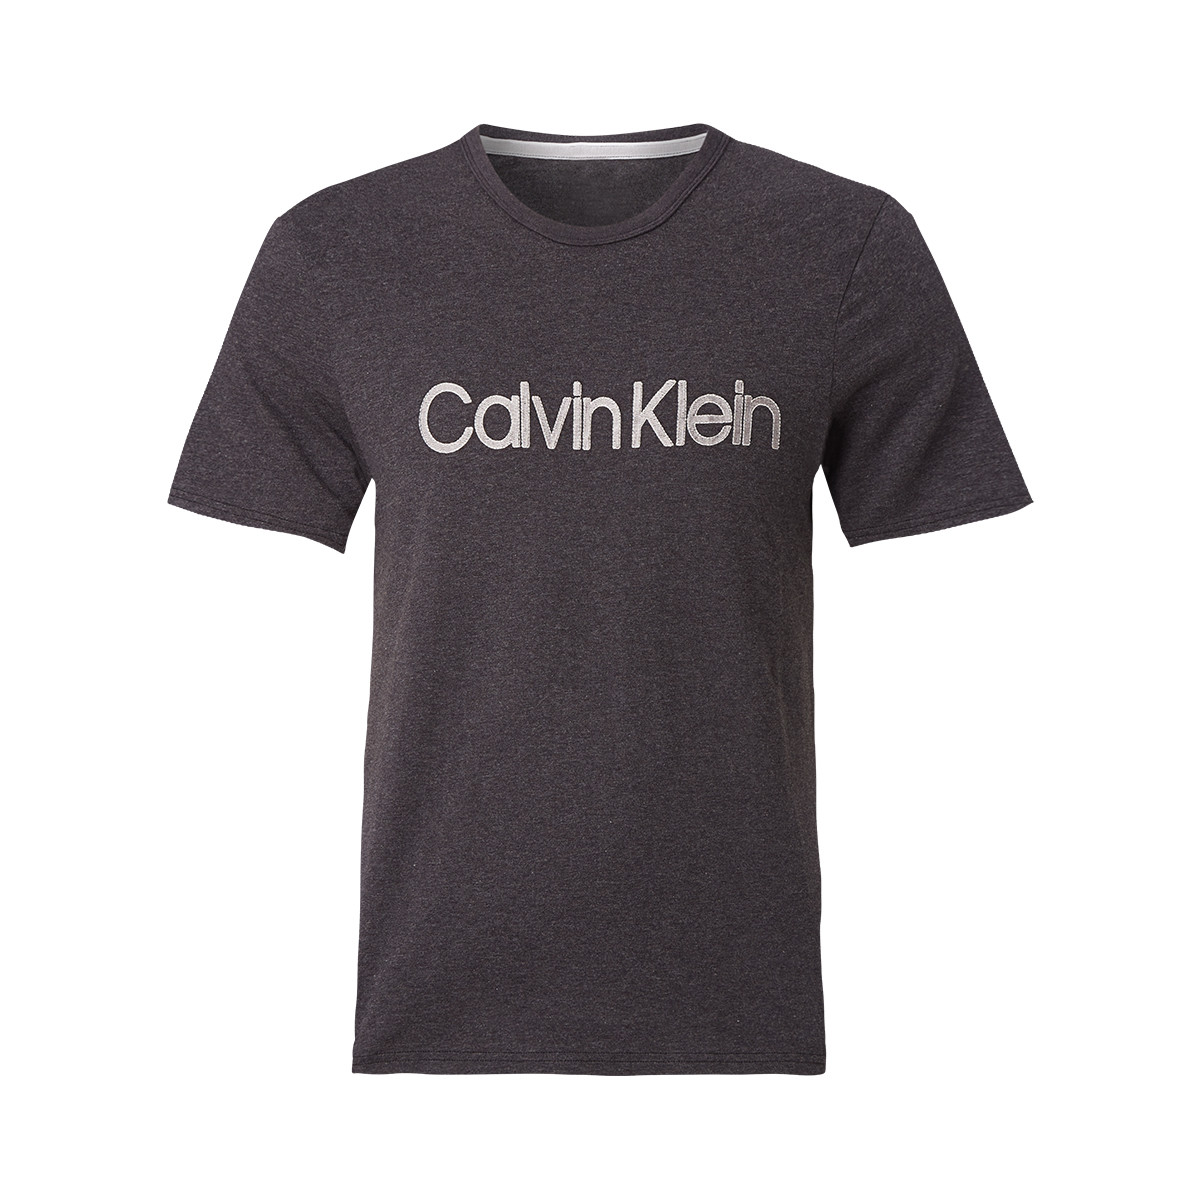 9: Calvin Klein T-shirt, Farve: Heather, Størrelse: XS, Dame